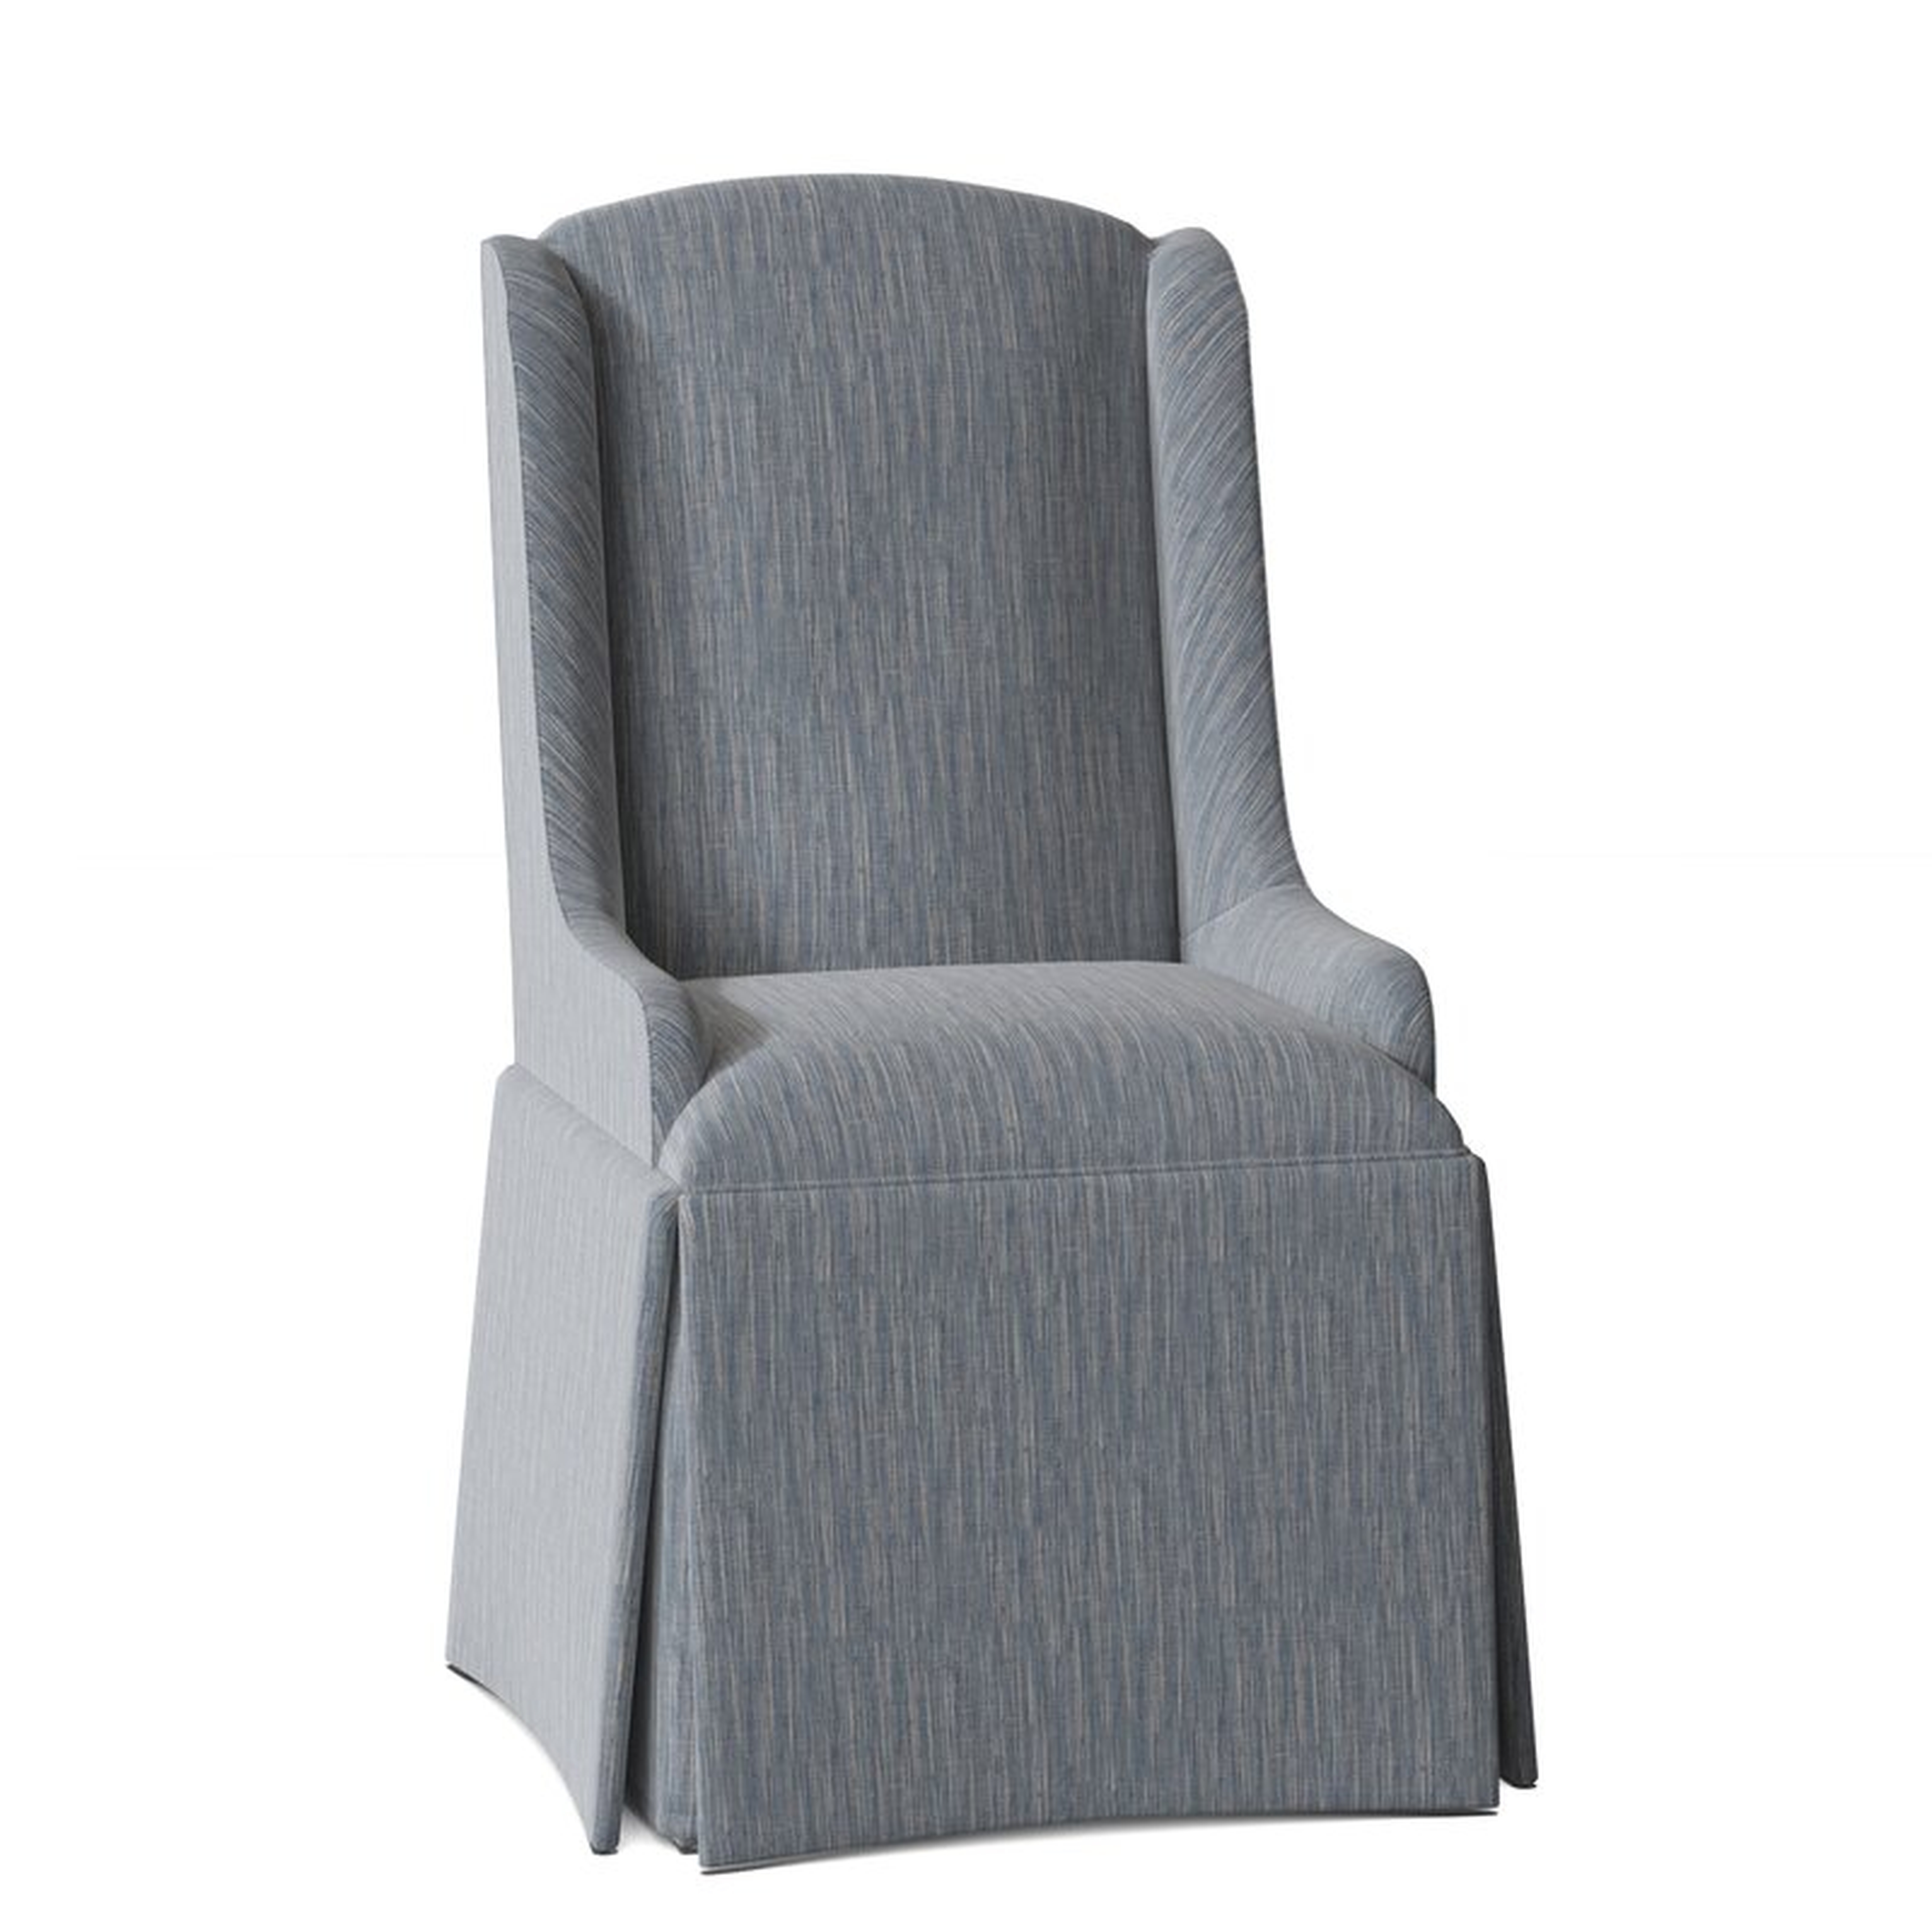 Doric Upholstered Wingback Arm Chair - Trinity Denim - Wayfair